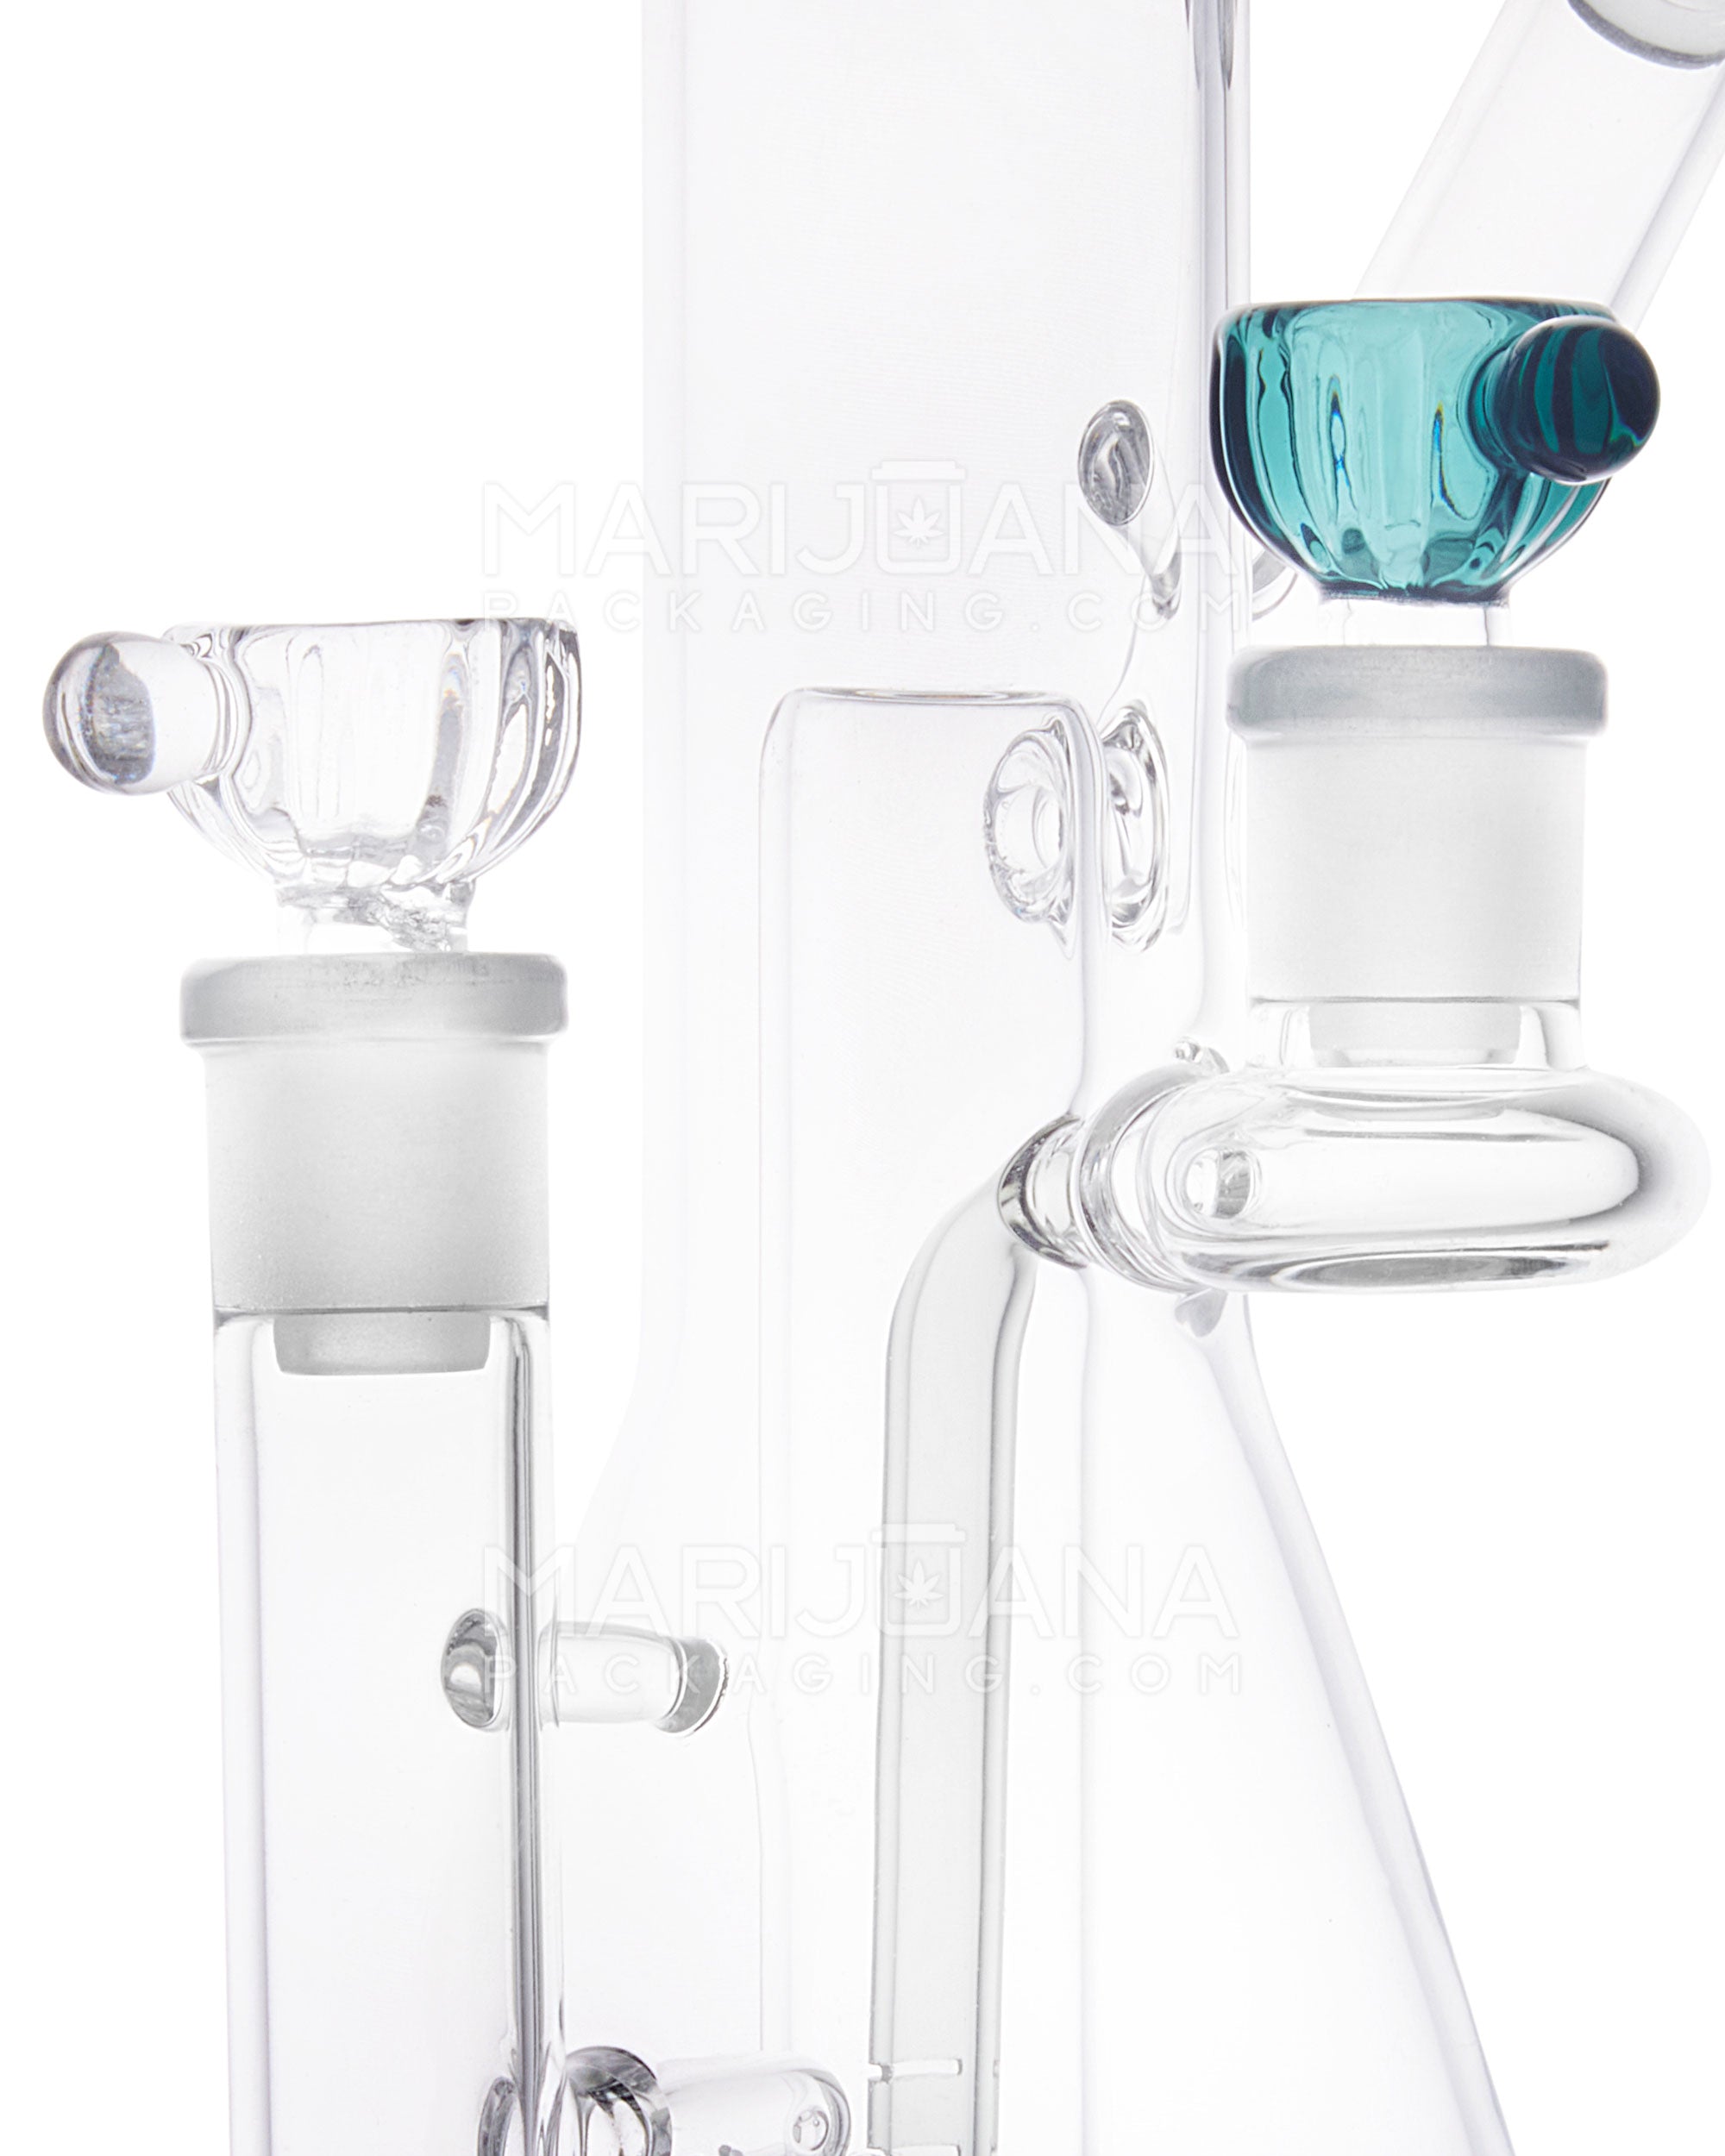 USA Glass | Bent Neck Dual Chamber Beaker Water Pipe | 7.5in Tall - 14mm Bowl - Smoke